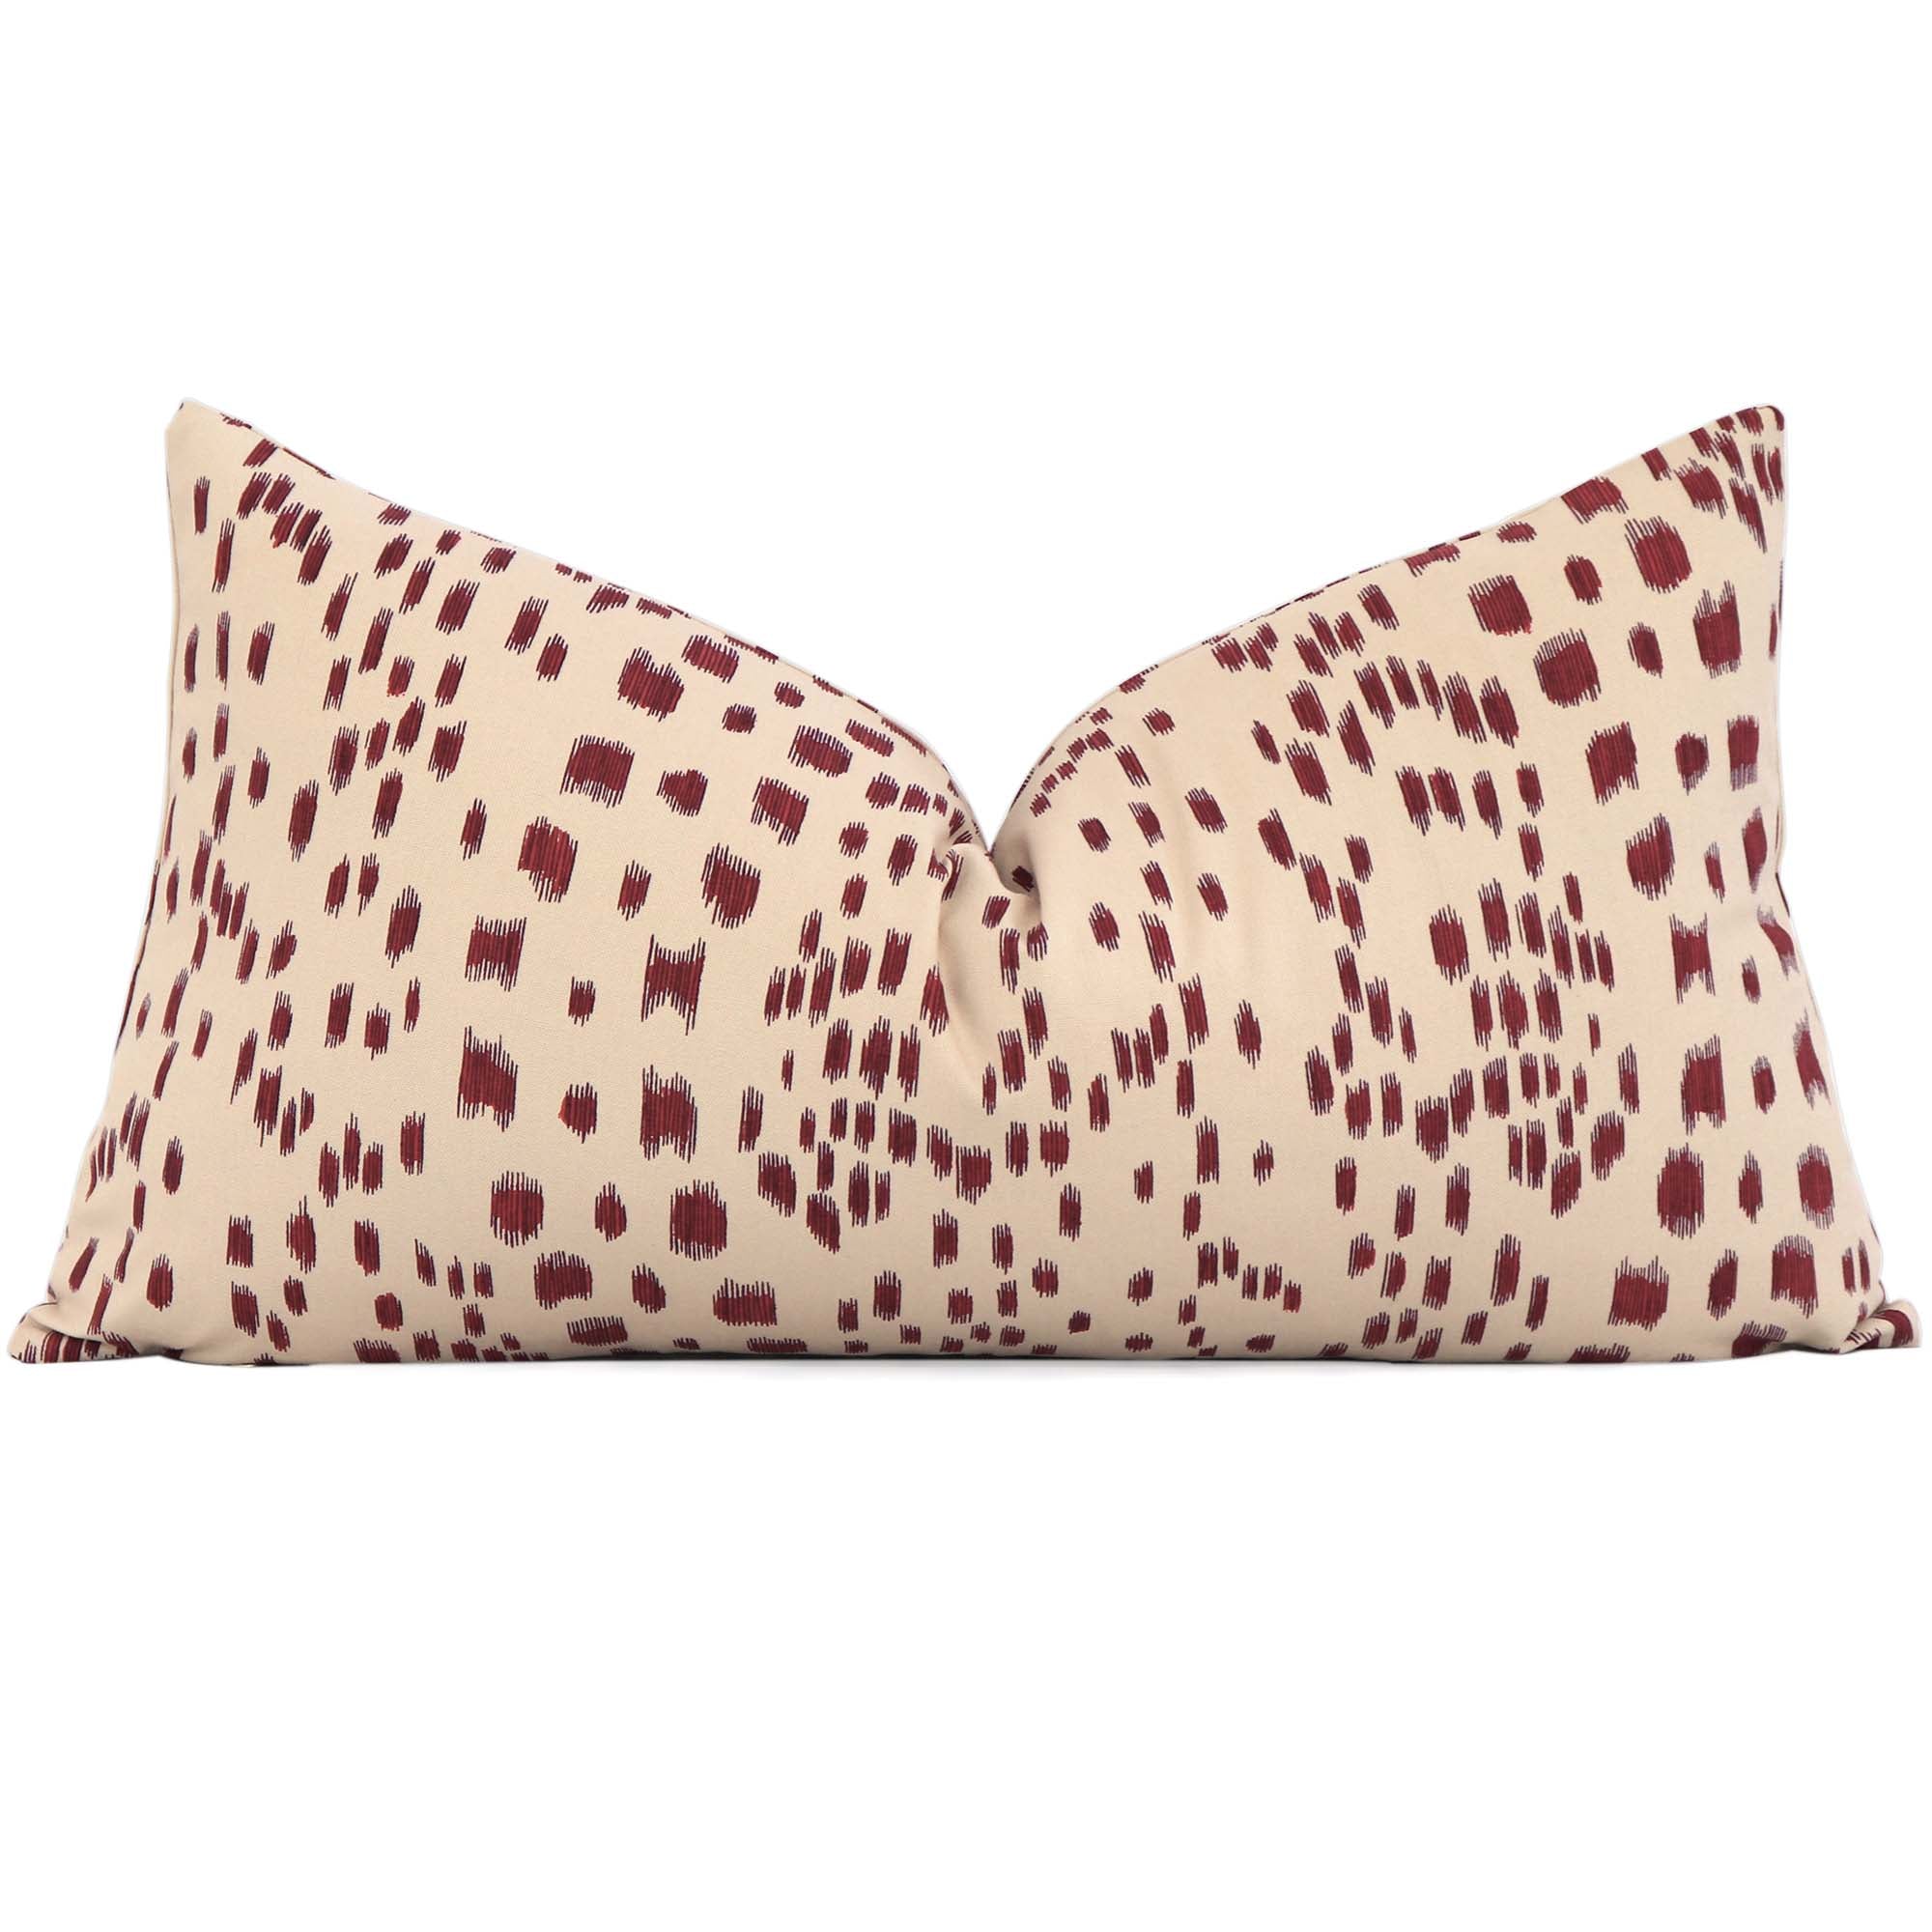 Brunschwig Fils Les Touches Bordeaux Red Designer Luxury Lumbar Throw Pillow Cover